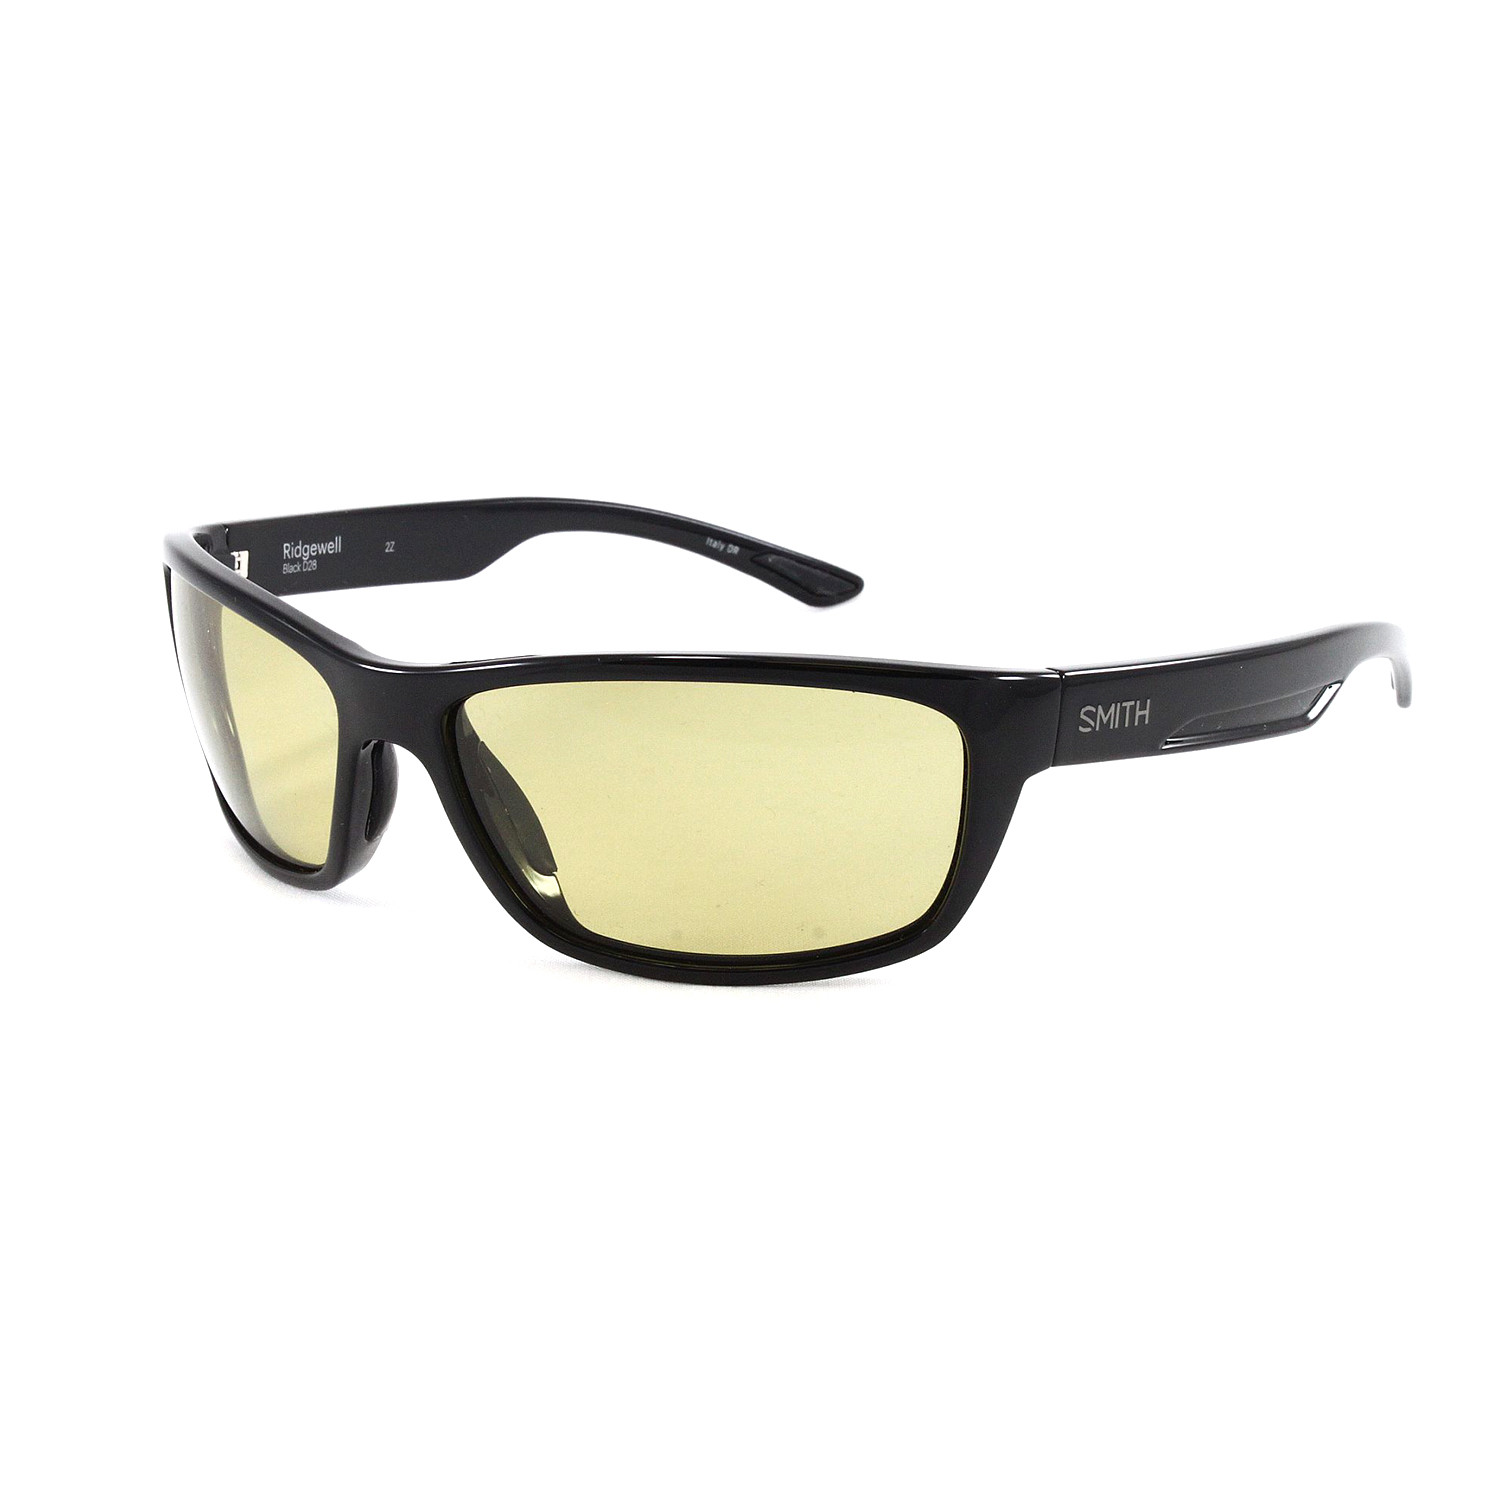 Men's Polarized Ridgewell Sunglasses // Black + Gold - Smith Optics ...